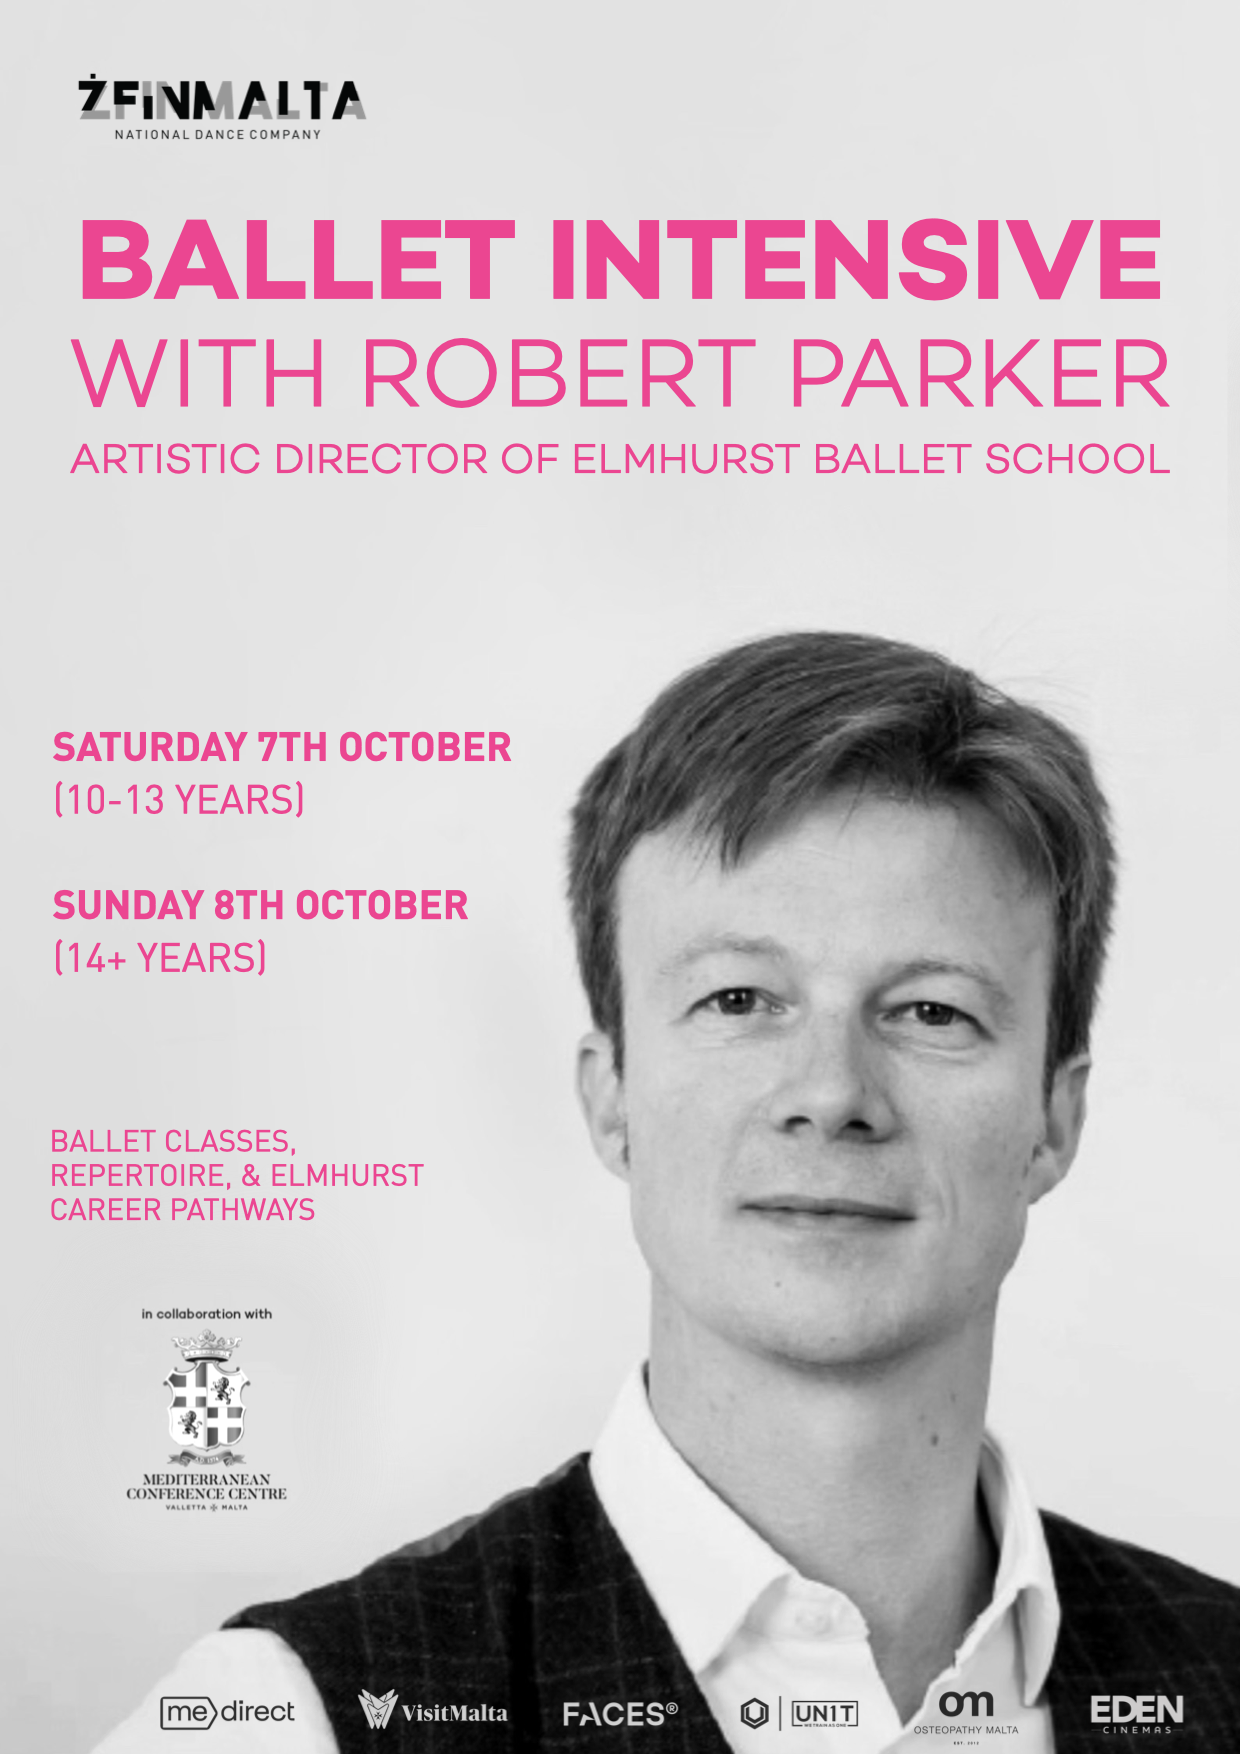 ŻfinMalta's Ballet intensive with Robert Parker poster